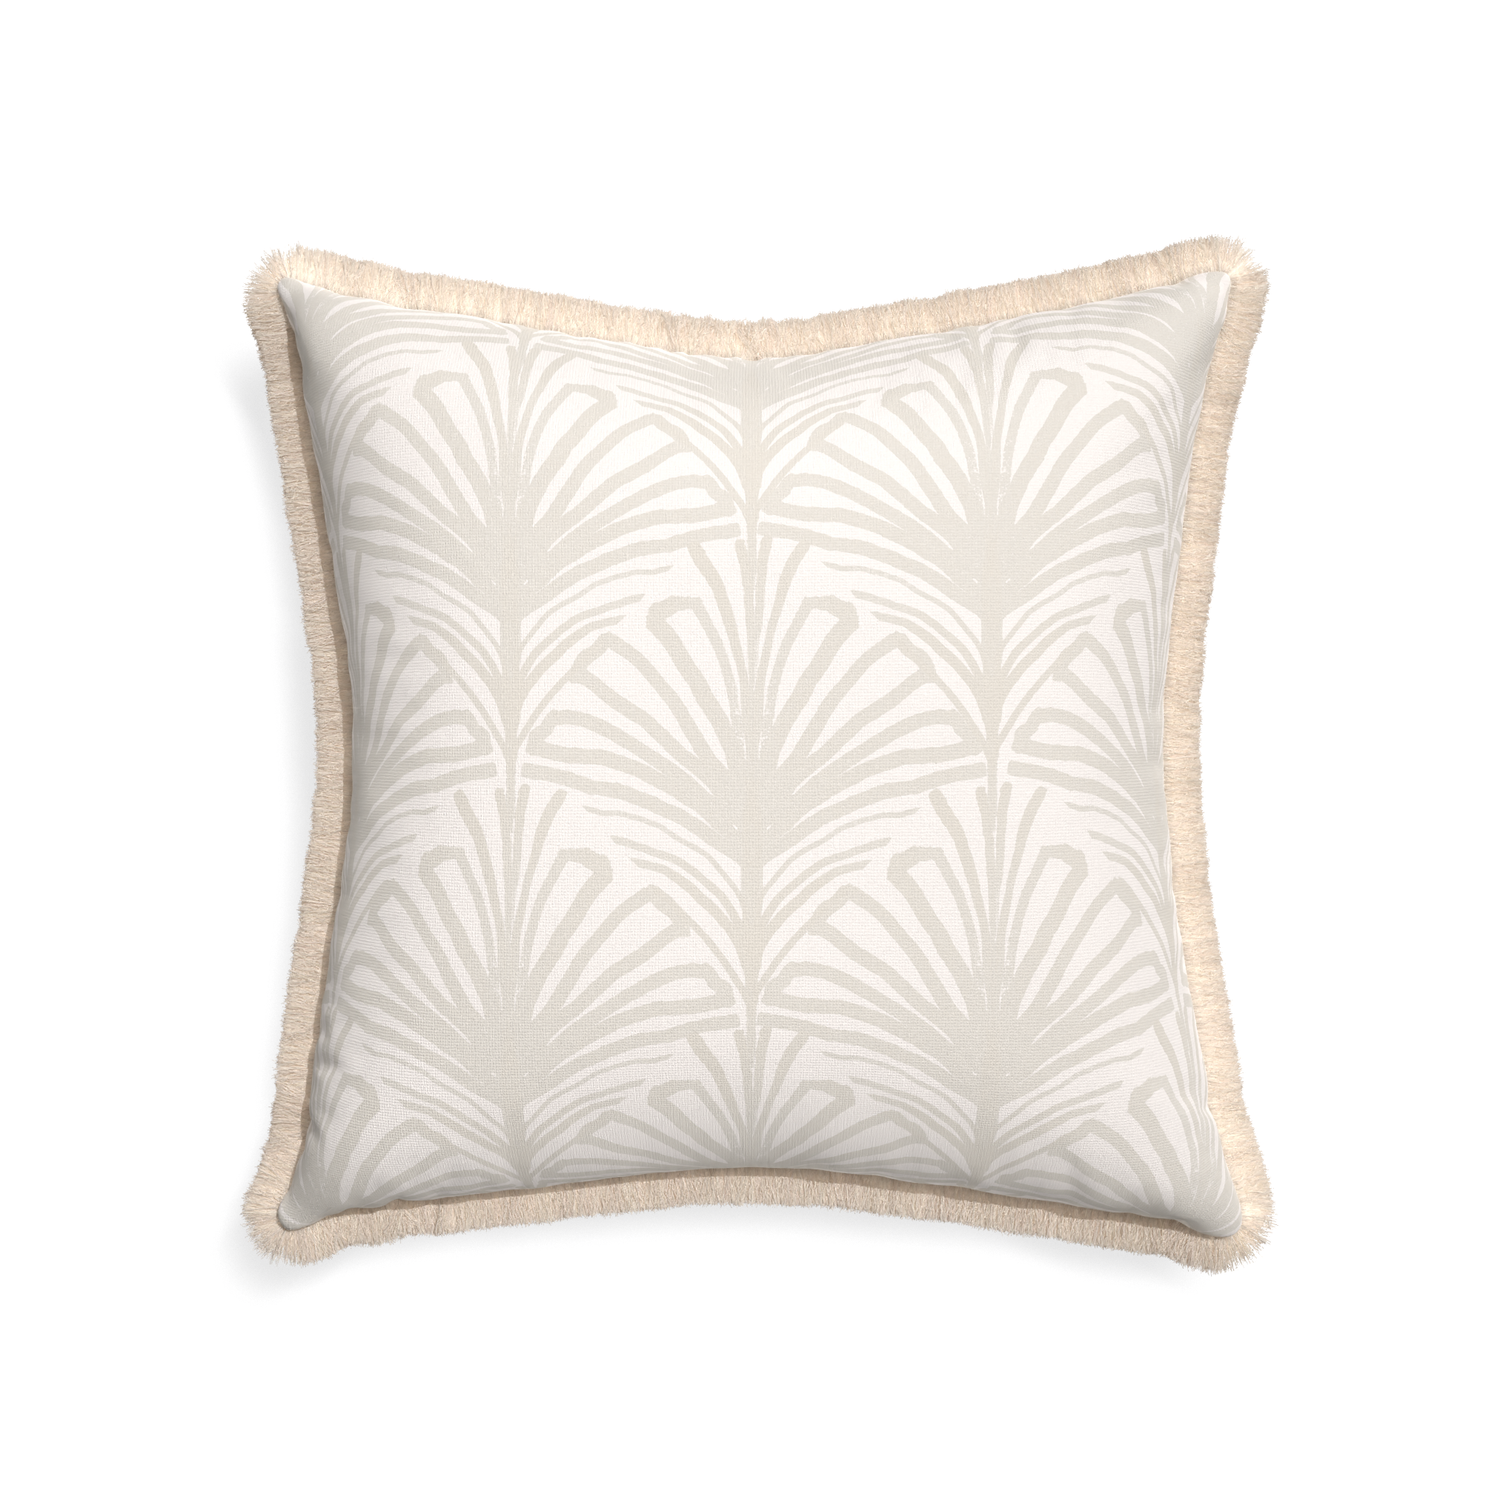 22-square suzy sand custom pillow with cream fringe on white background